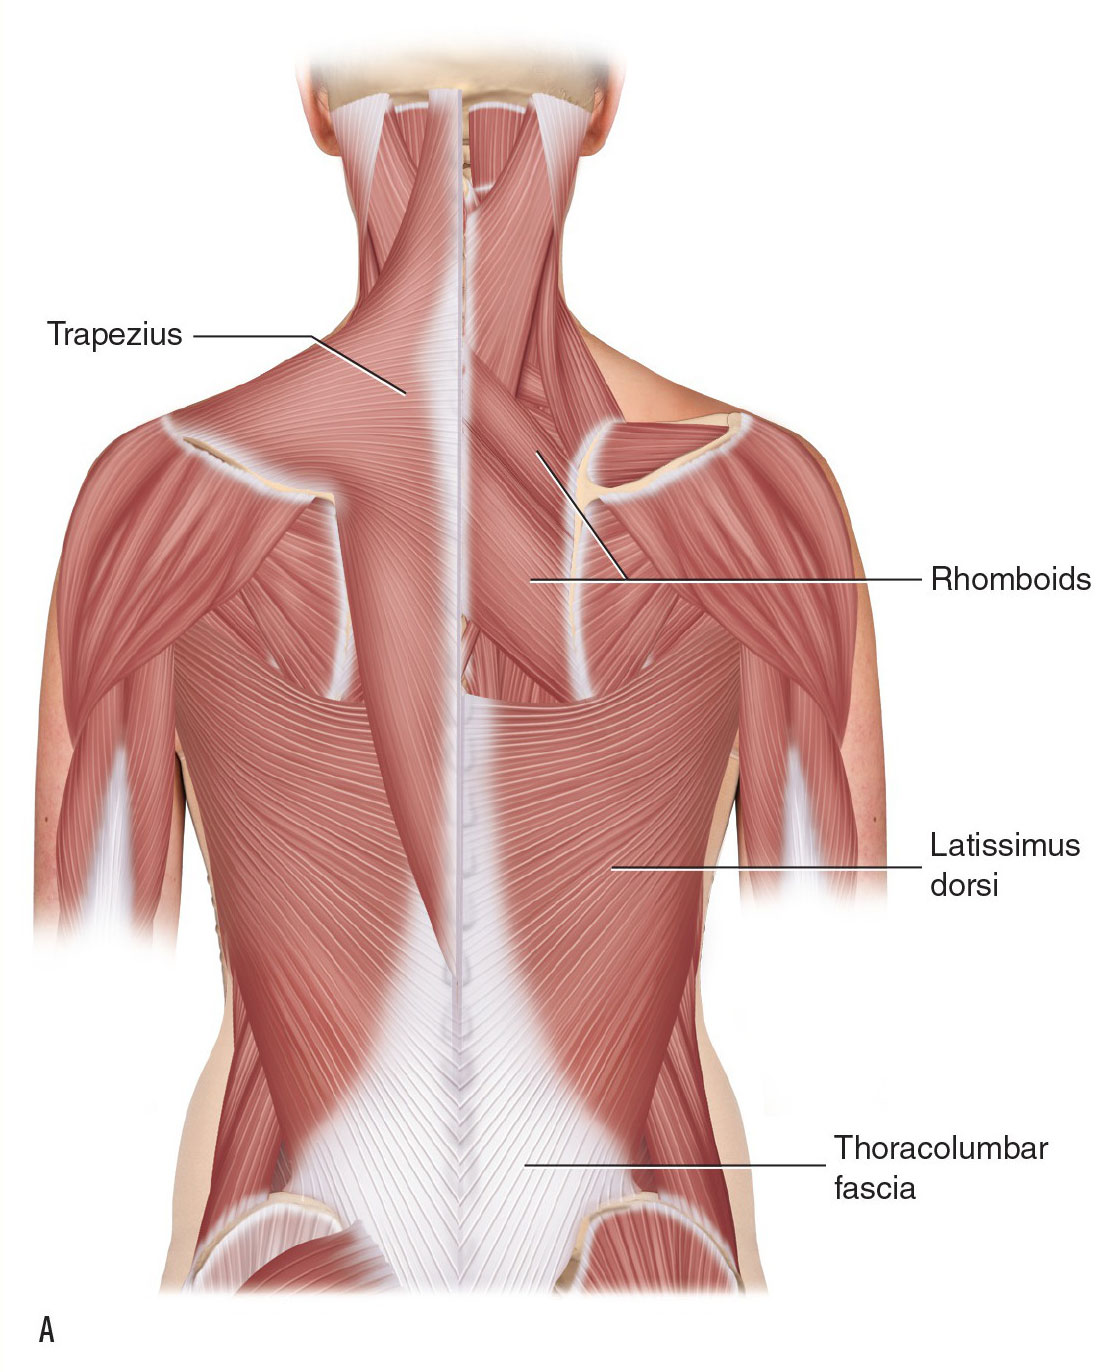 Views of thoracolumbar fascia and abdominal fascia